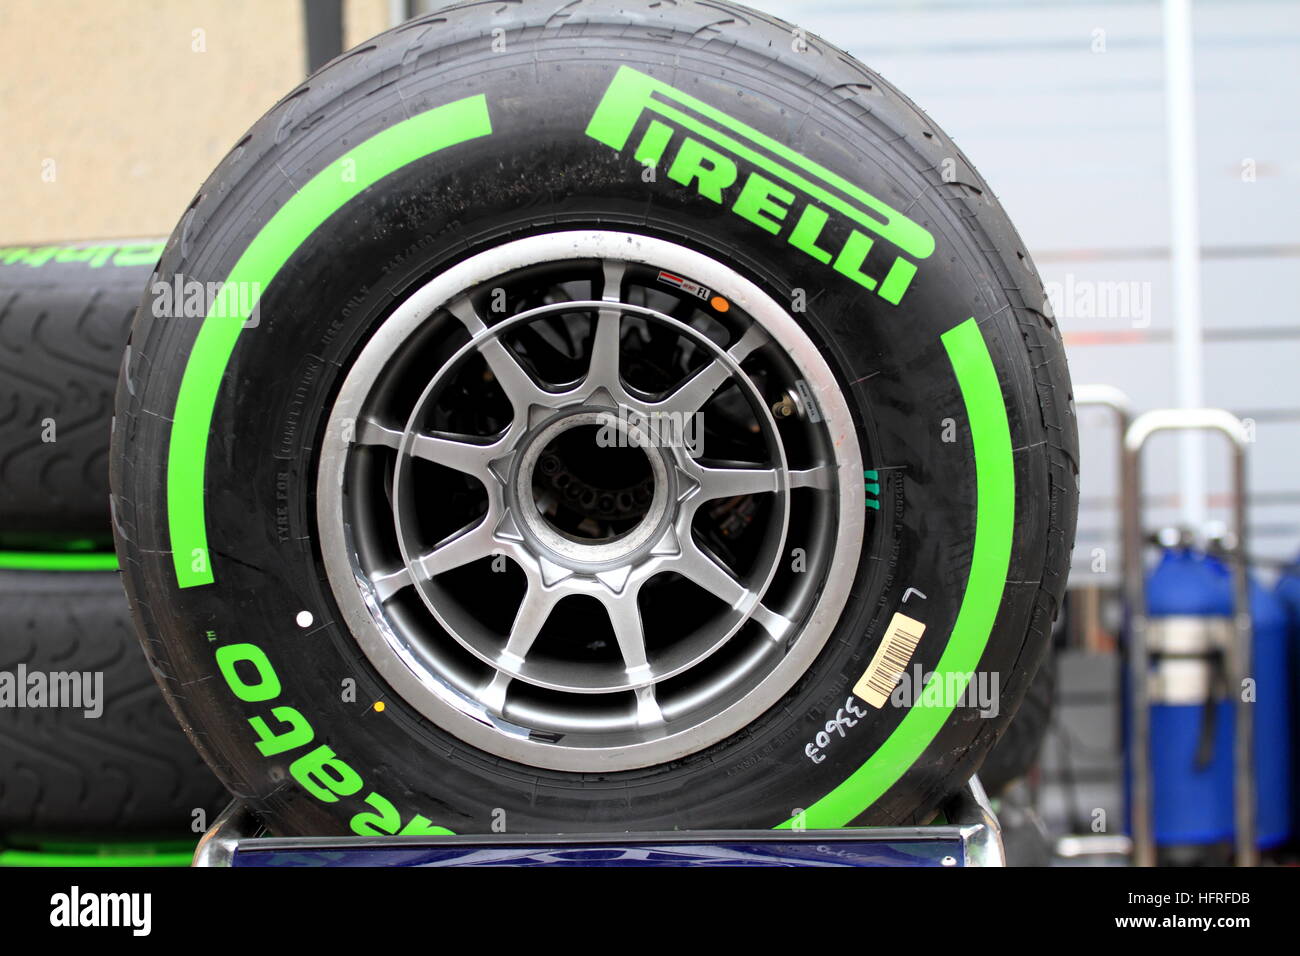 Pirelli green rain tires for Formula One races Stock Photo - Alamy